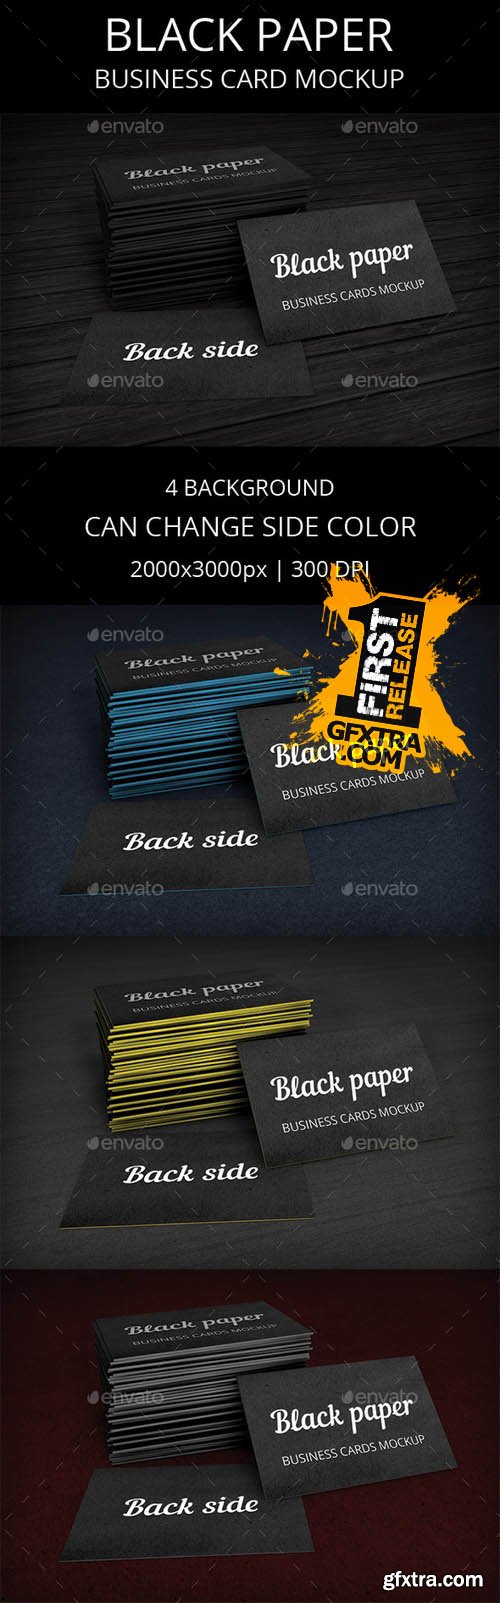 Black Business Card Mockup - Graphicriver 10199679